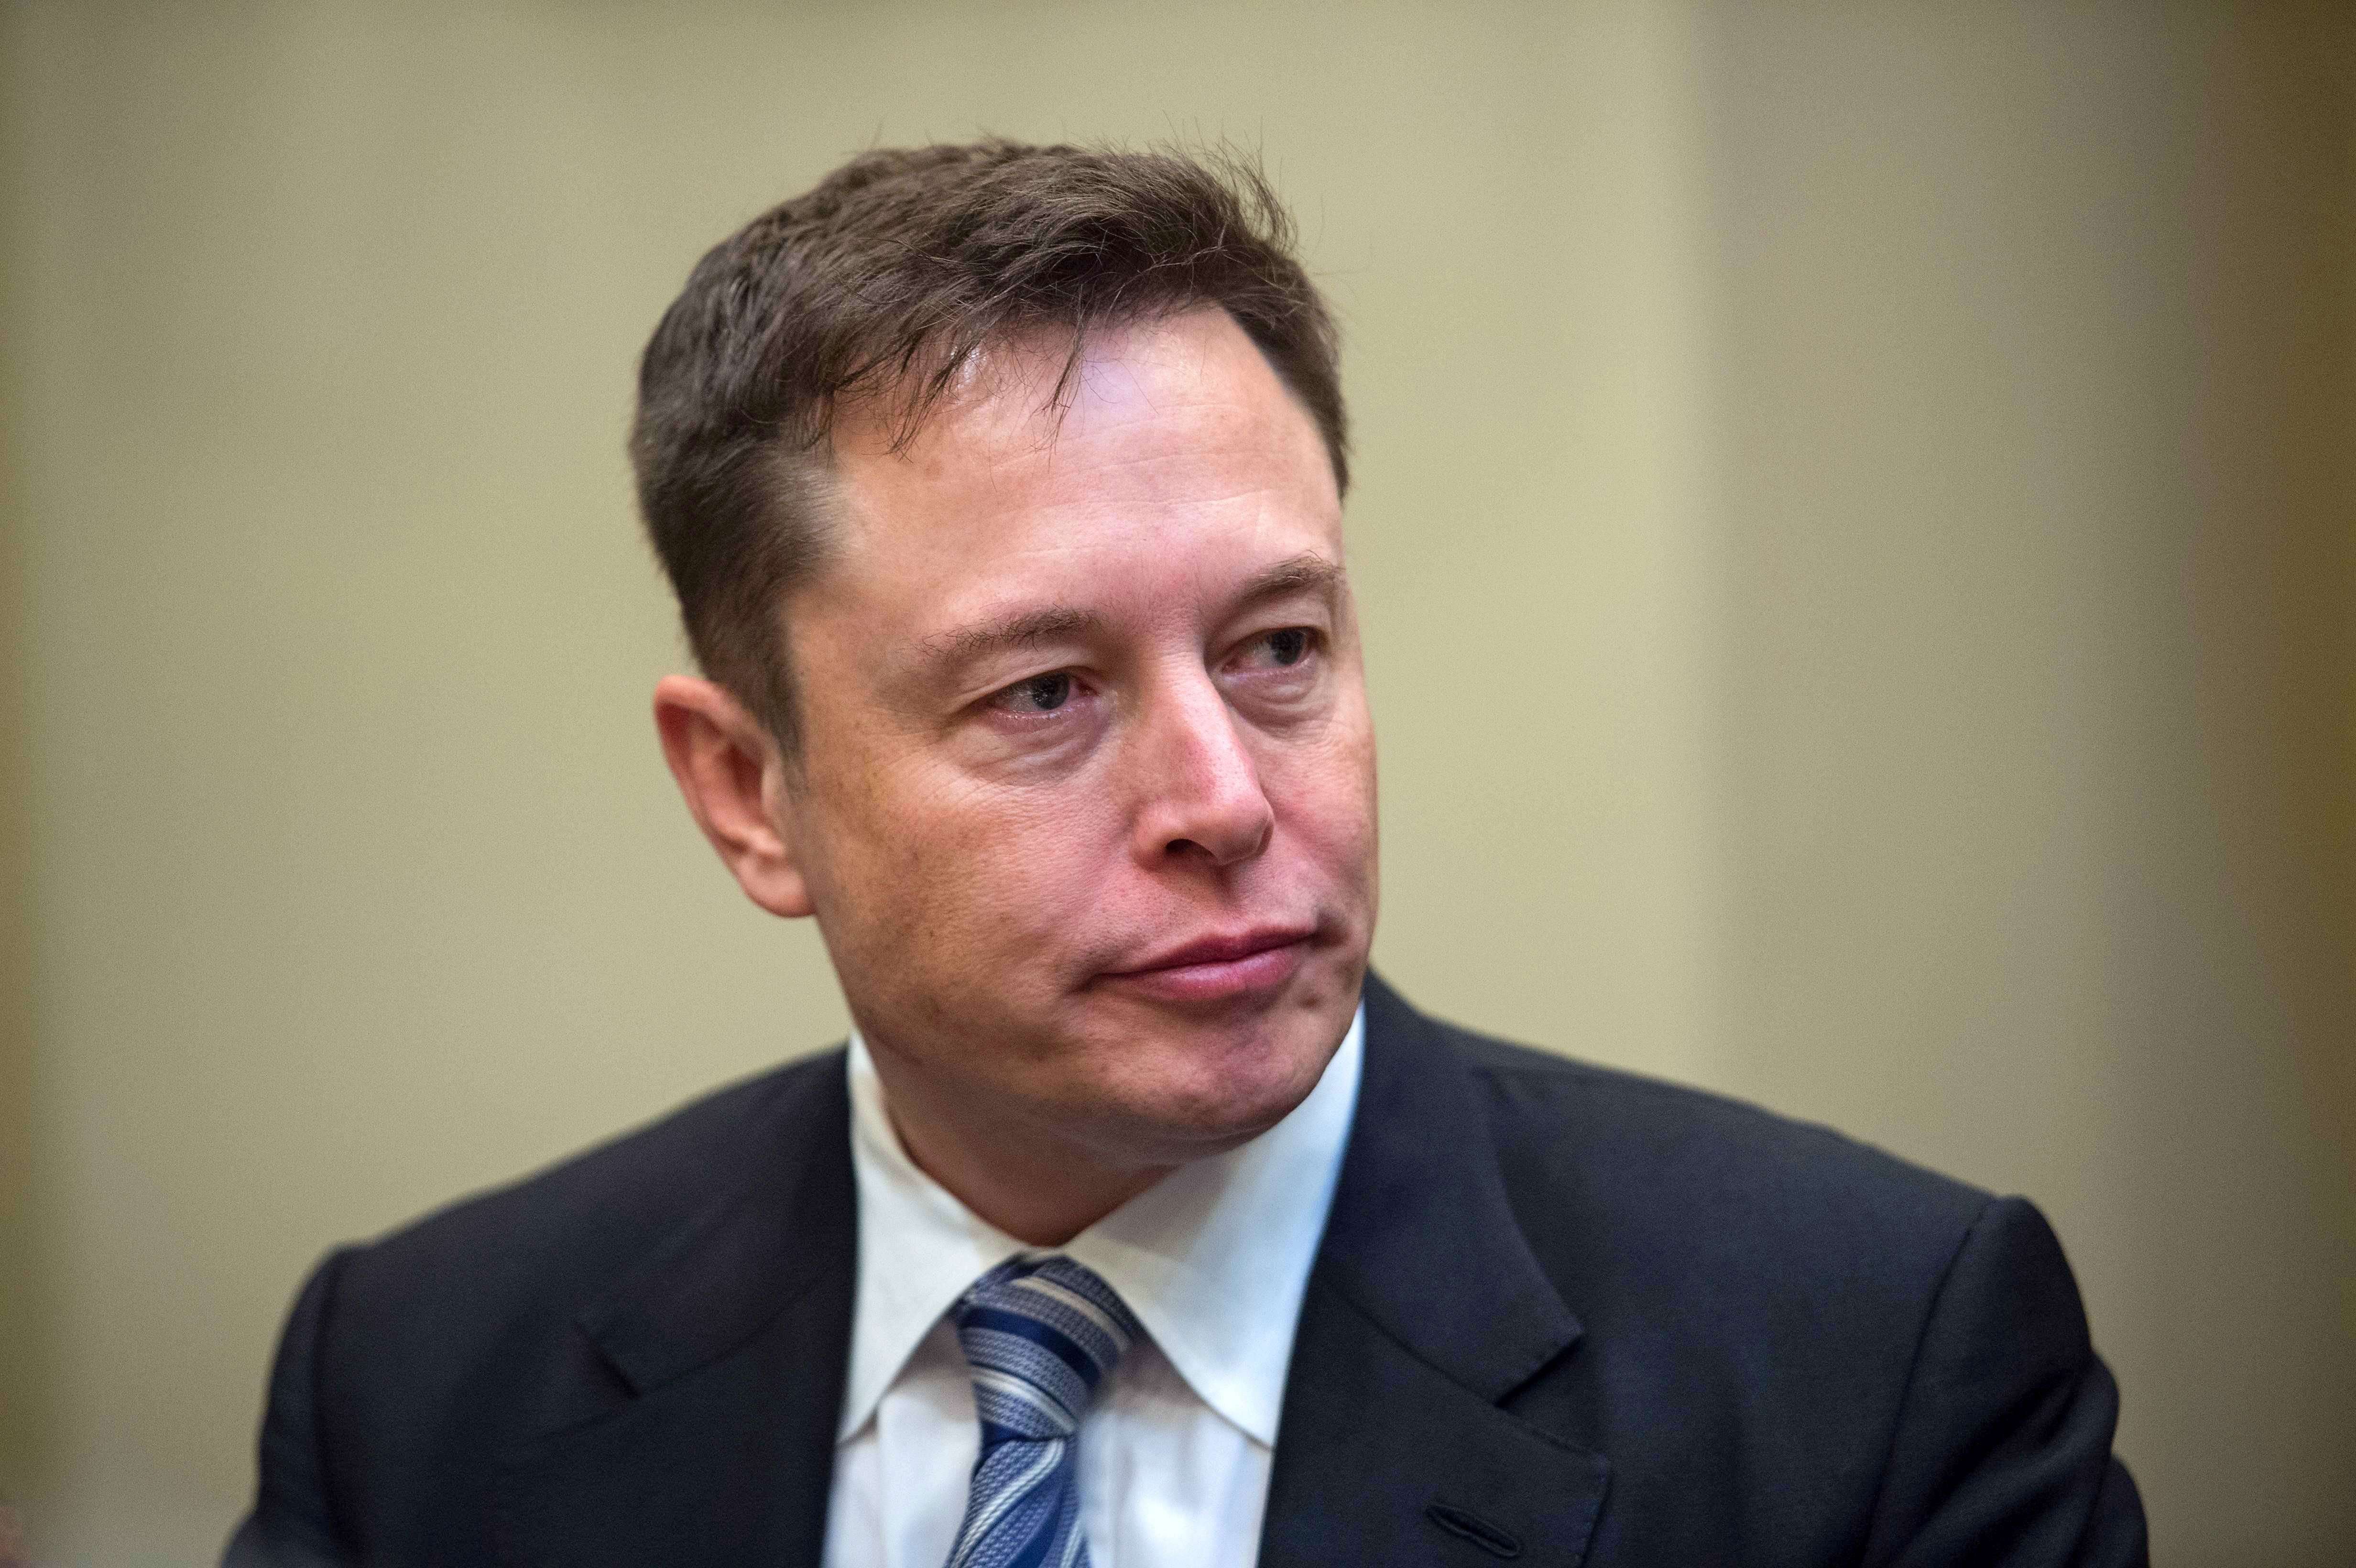 image for Elon Musk Calls Transit Expert 'Idiot,' Says Public Transport 'Sucks'